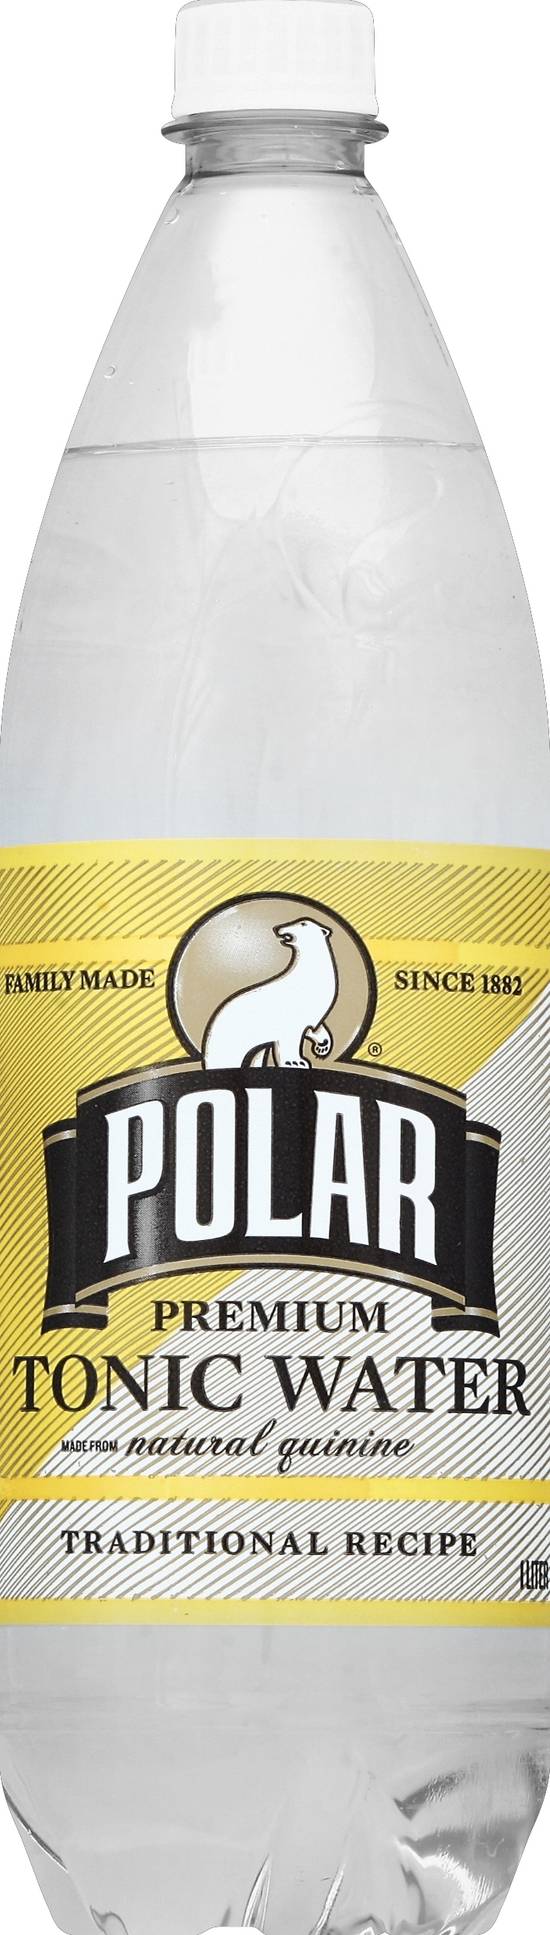 Polar Traditional Premium Tonic Water (1 lt)